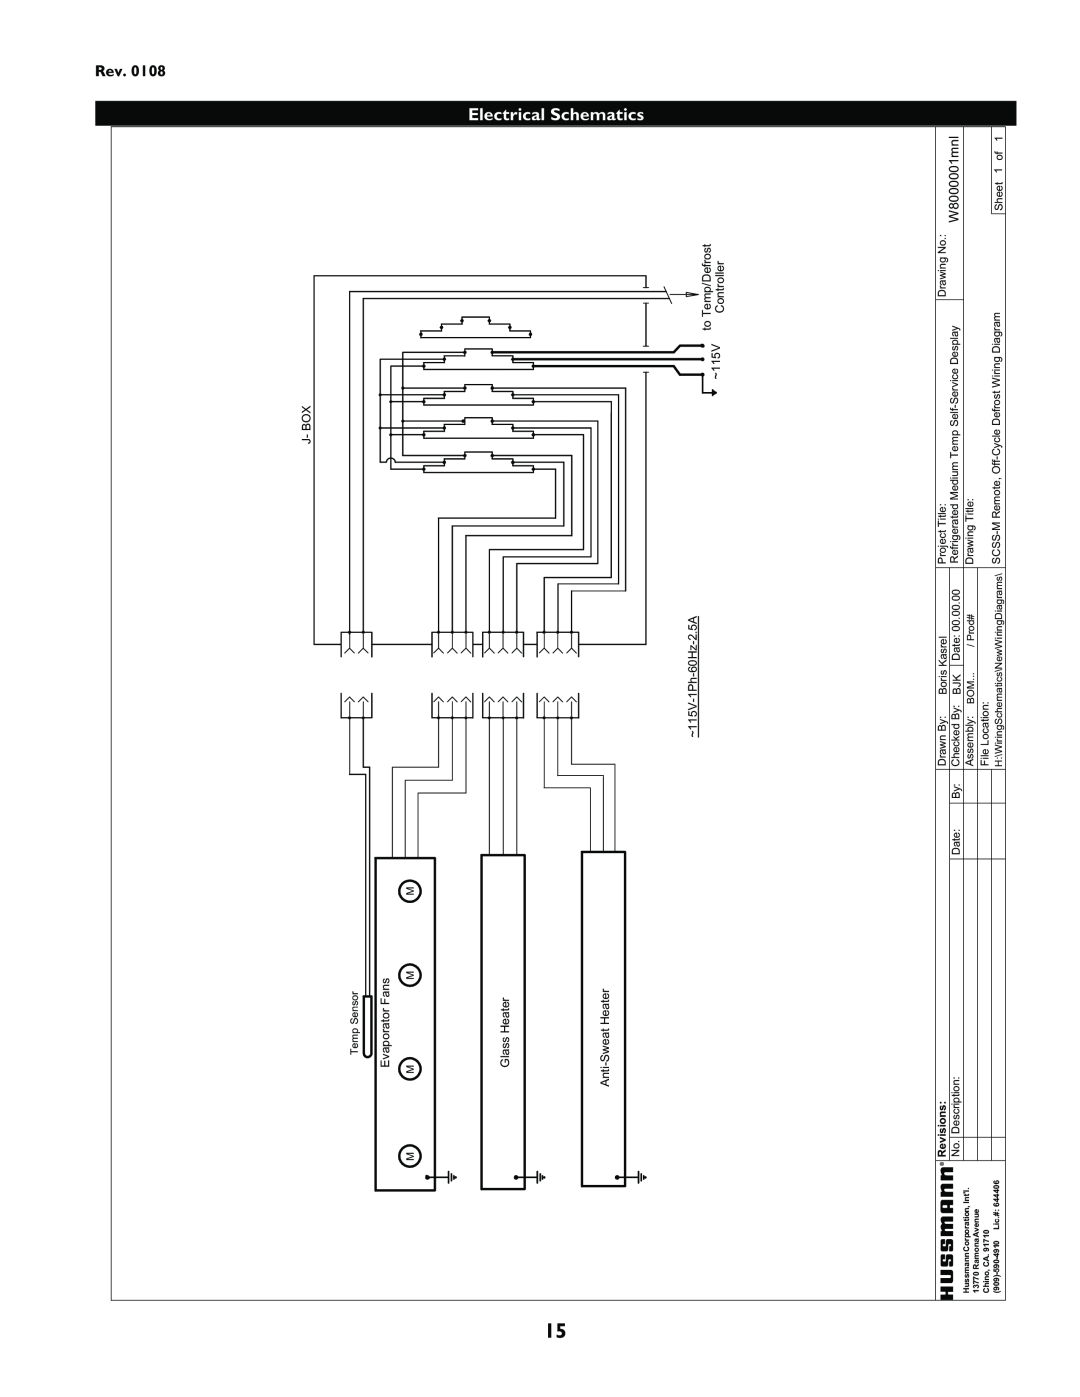 hussman SCSS Electrical Schematics, W8000001mnl, Temp/Defrost, Controller, J- BOX ~115V-1Ph-60Hz-2.5A, EvaporatorFans 